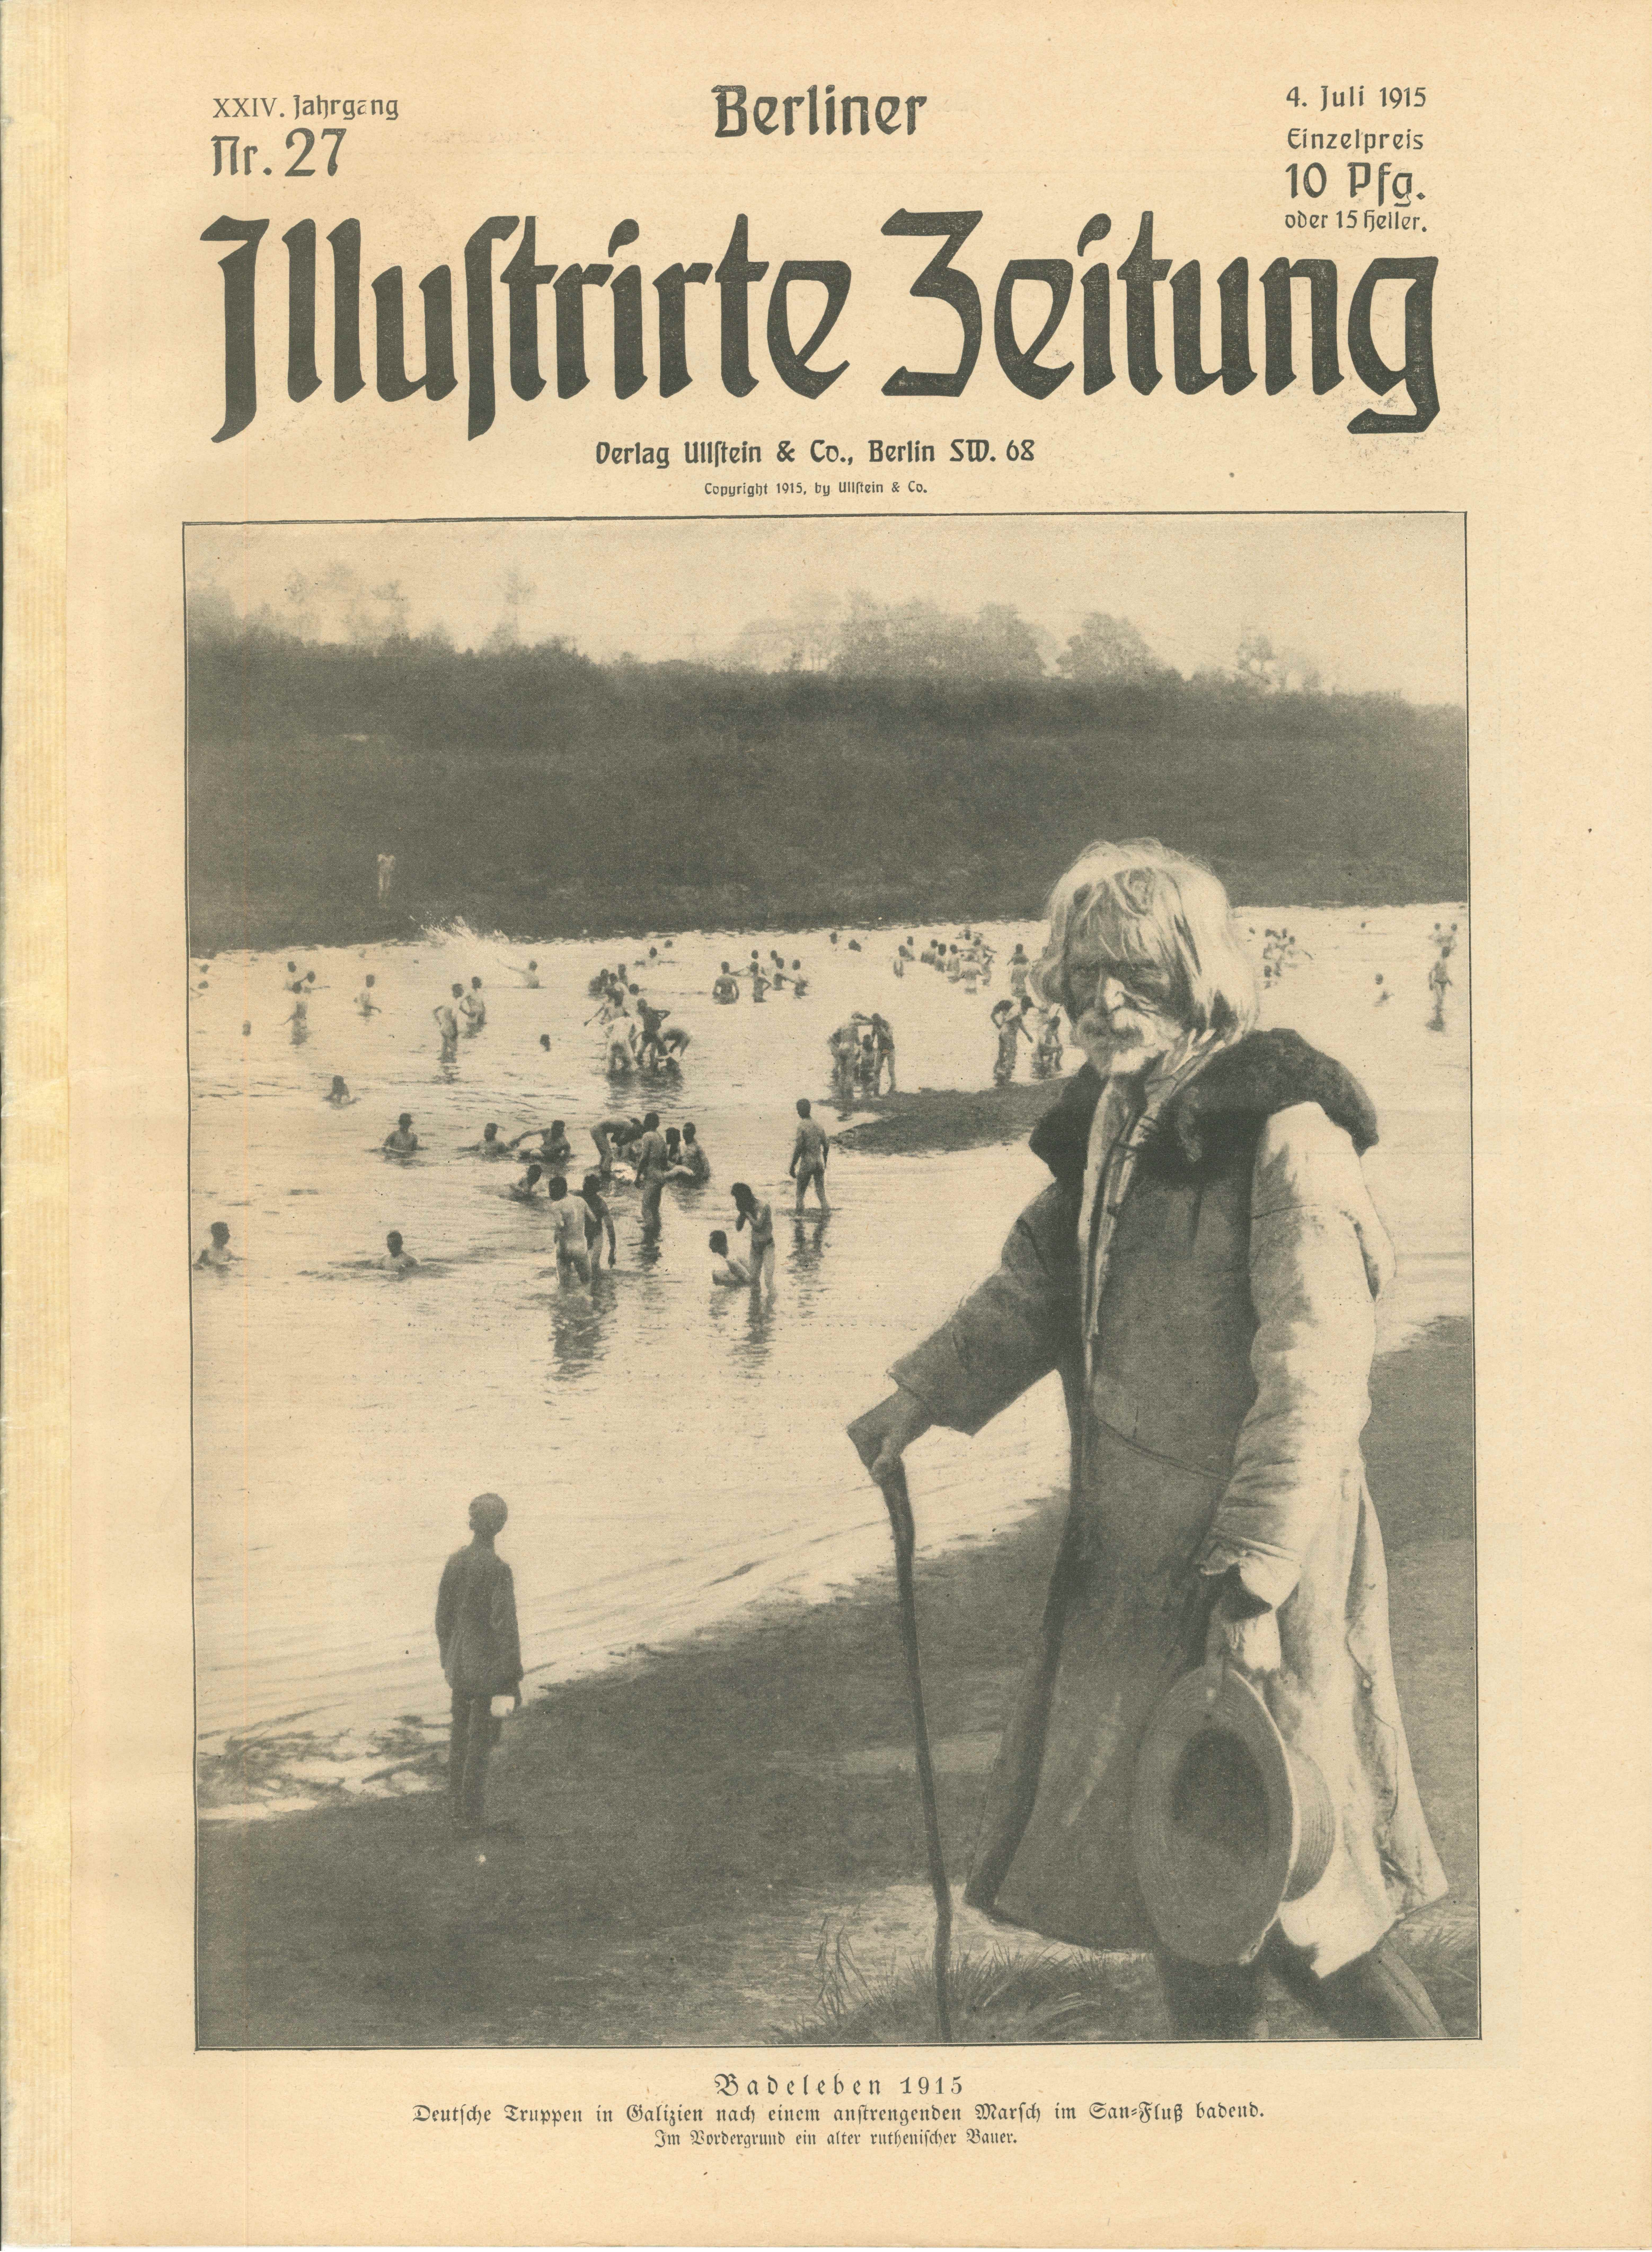 BIZ, Nr. 27, 1915, Titelseite (Kurt Tucholsky Literaturmuseum CC BY-NC-SA)